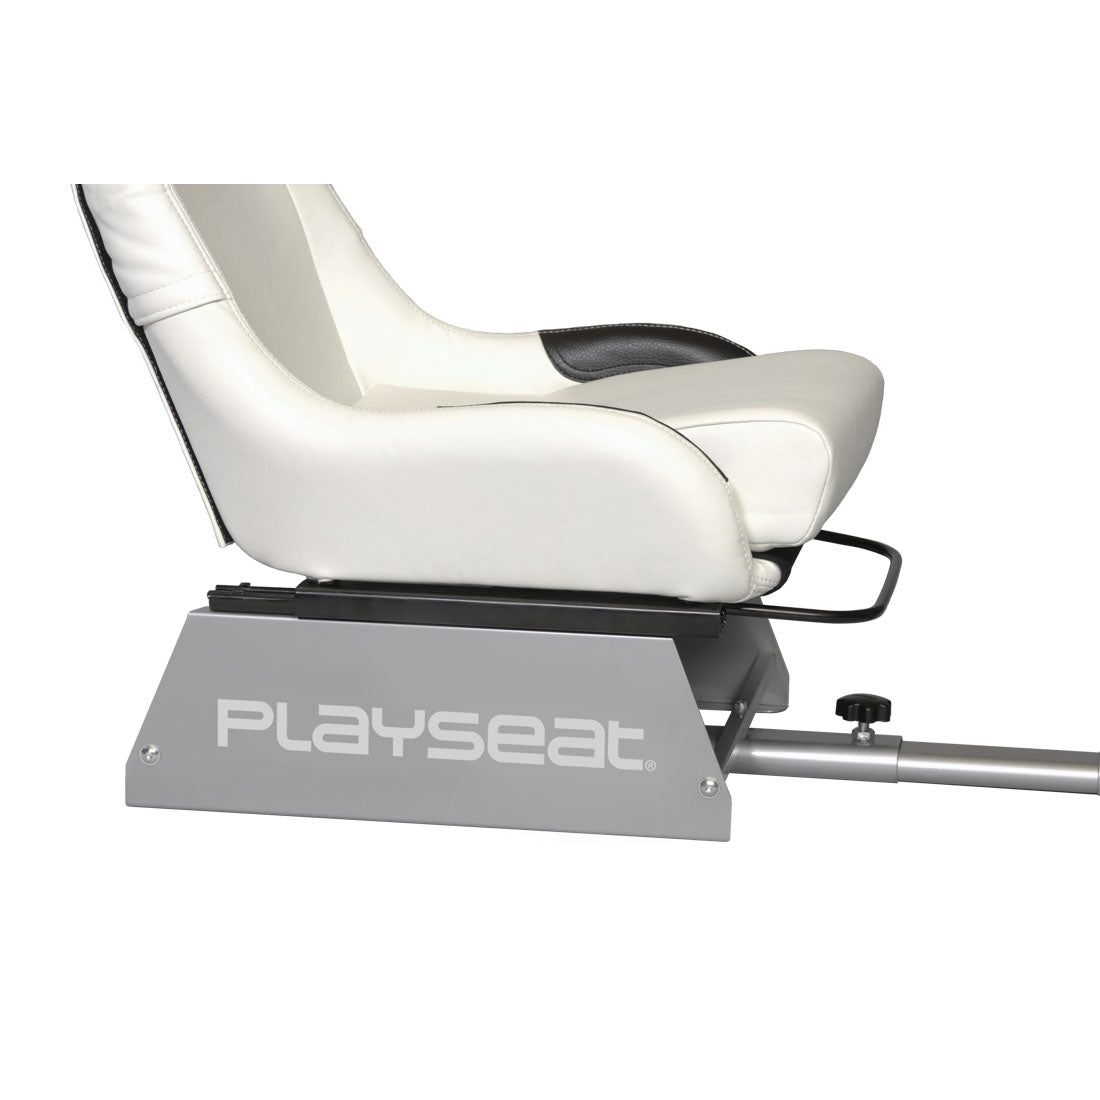 PlaySeat - Seatslider